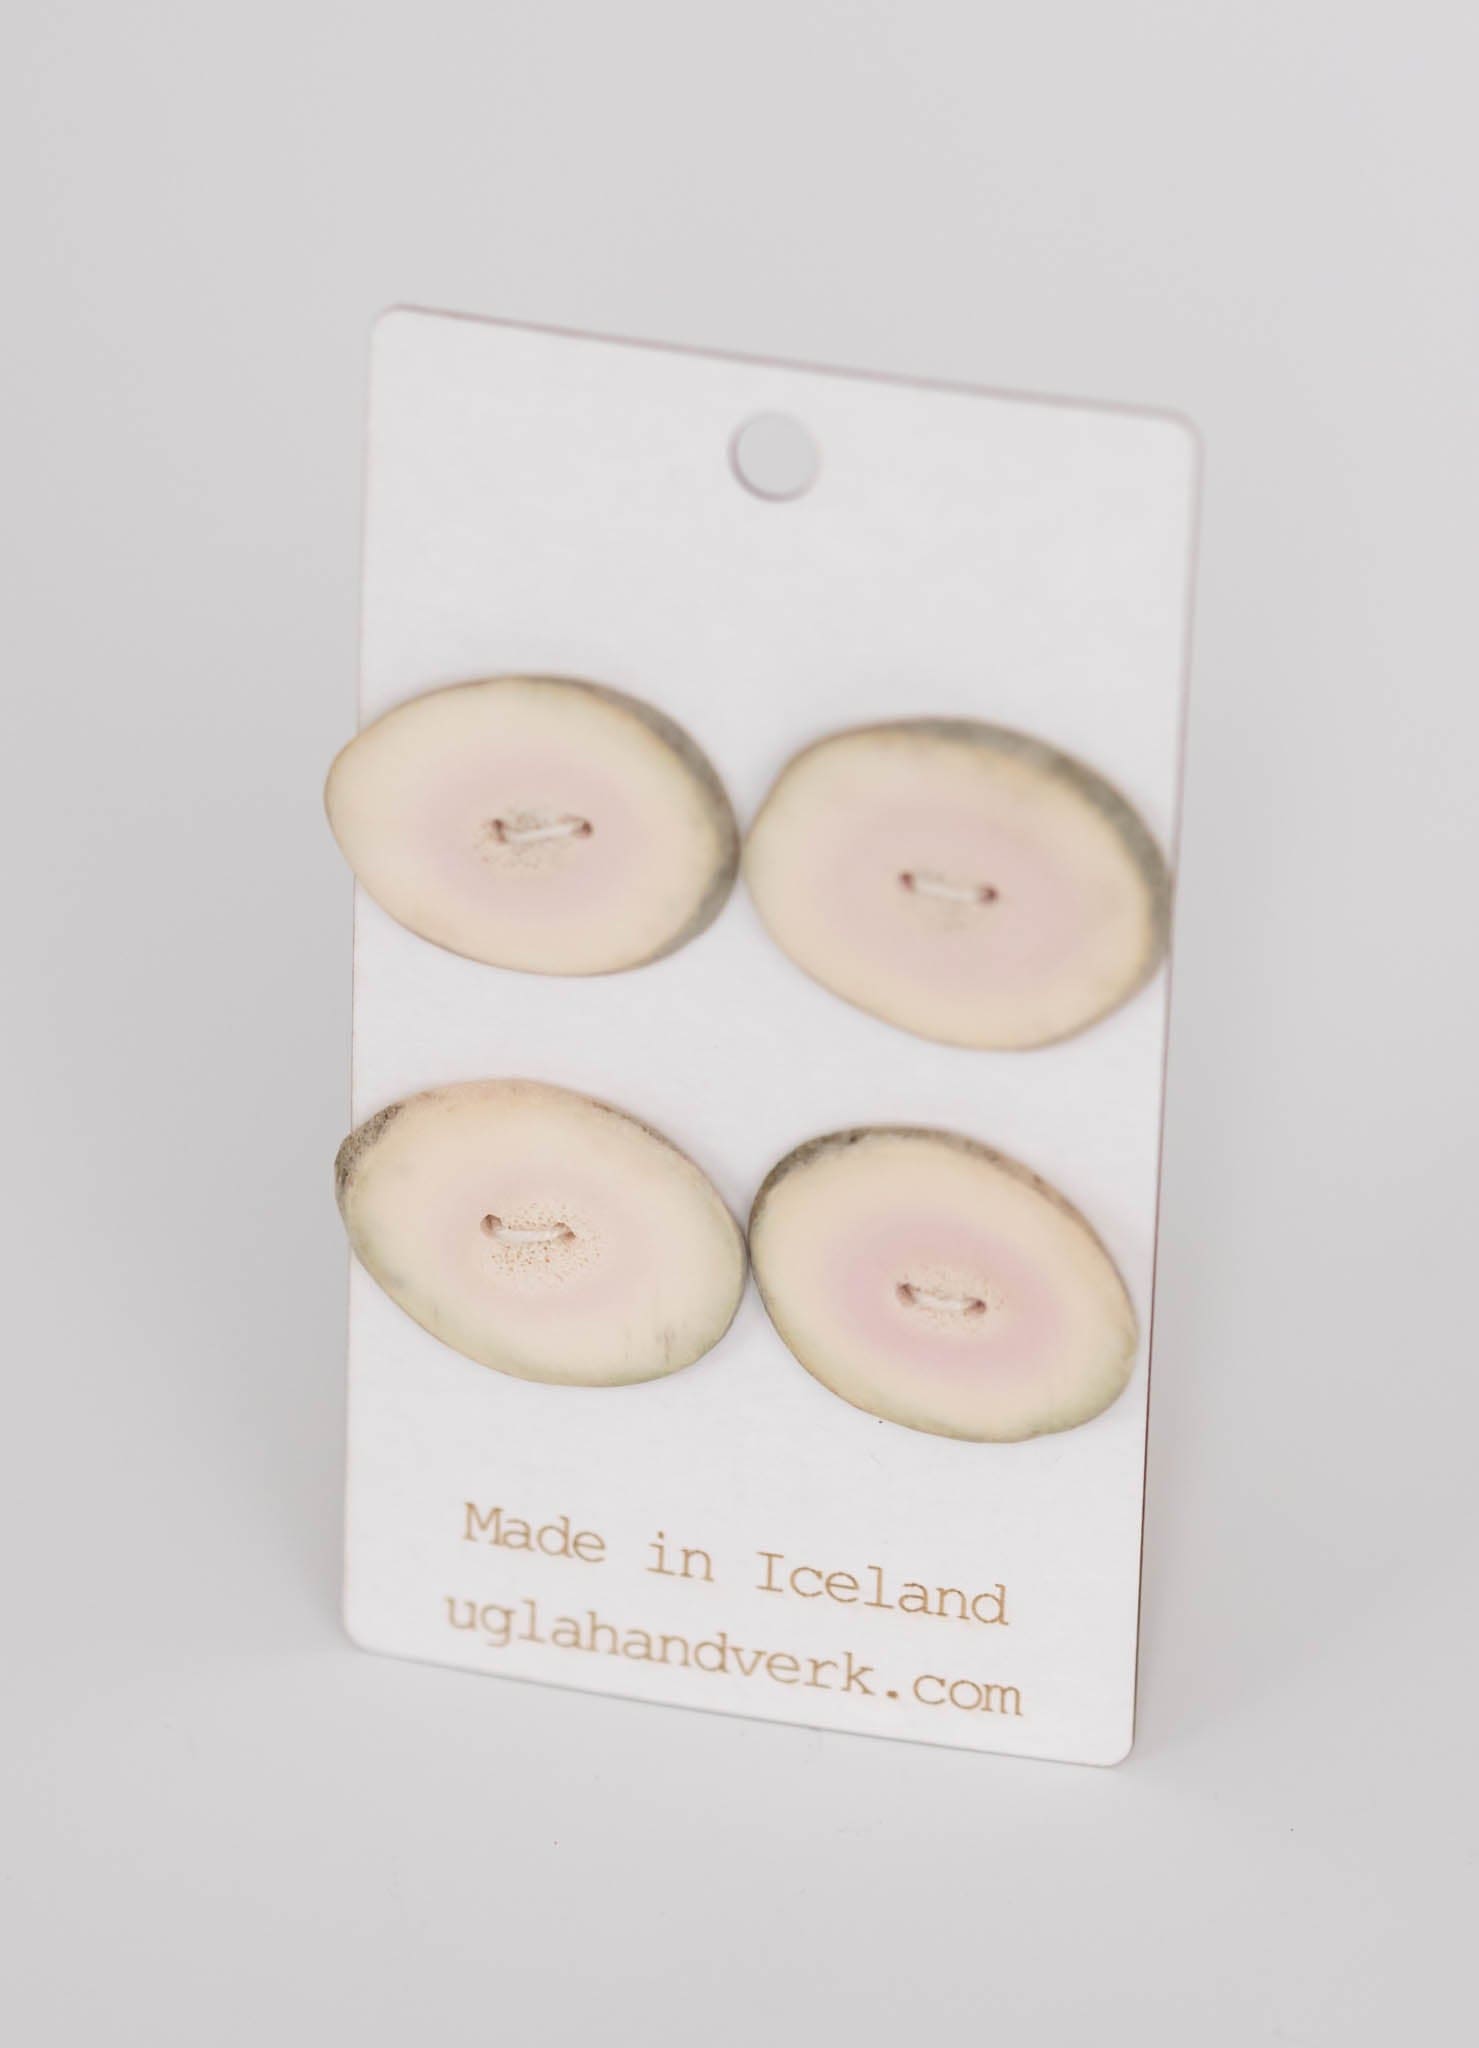 Reindeer Antler Buttons - The Icelandic Store